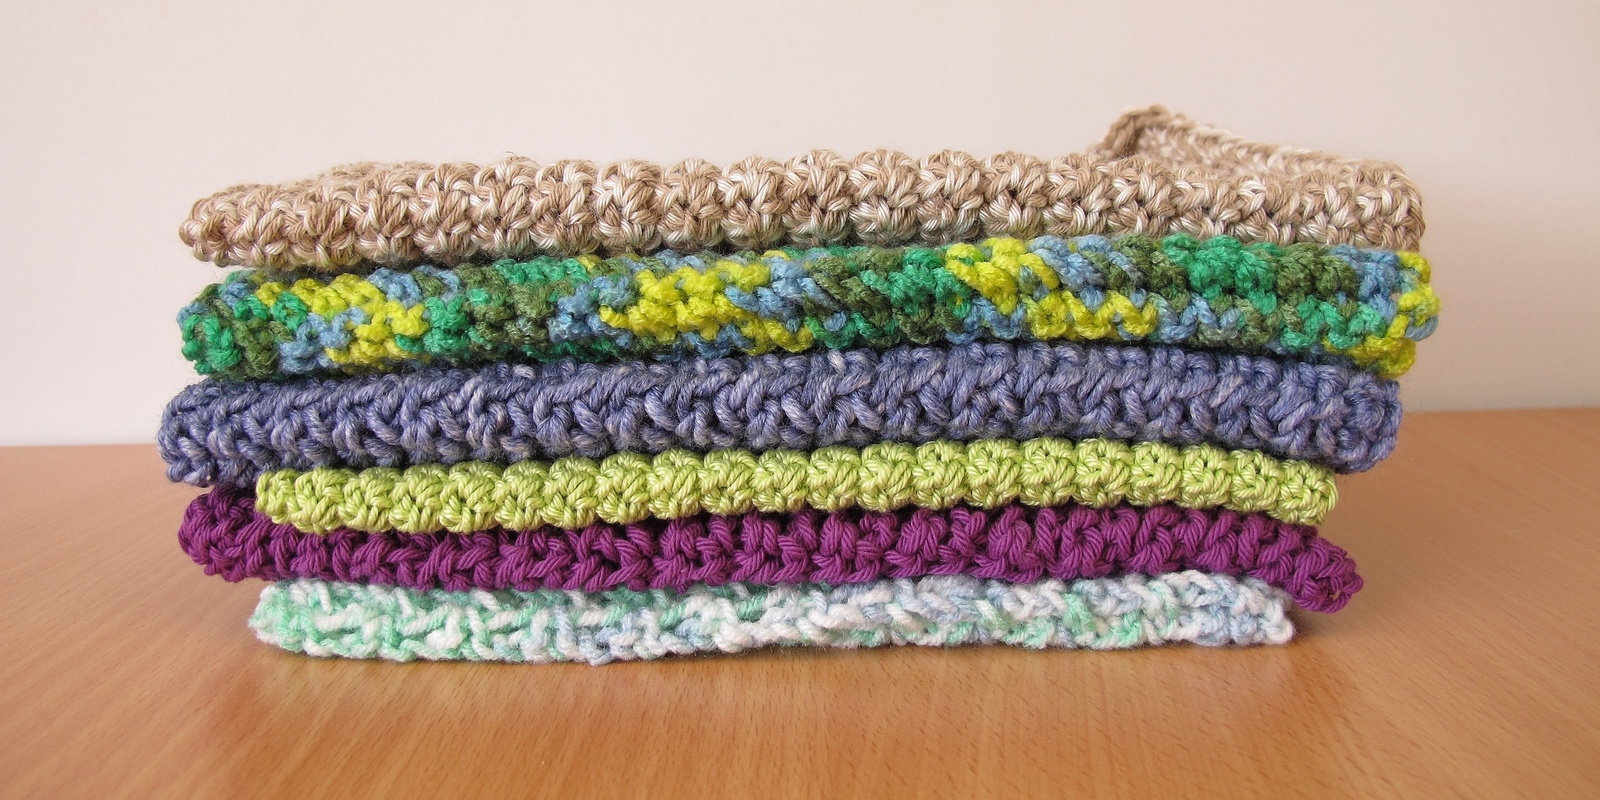 Crochet a Wash Cloth (School Holiday Activity)